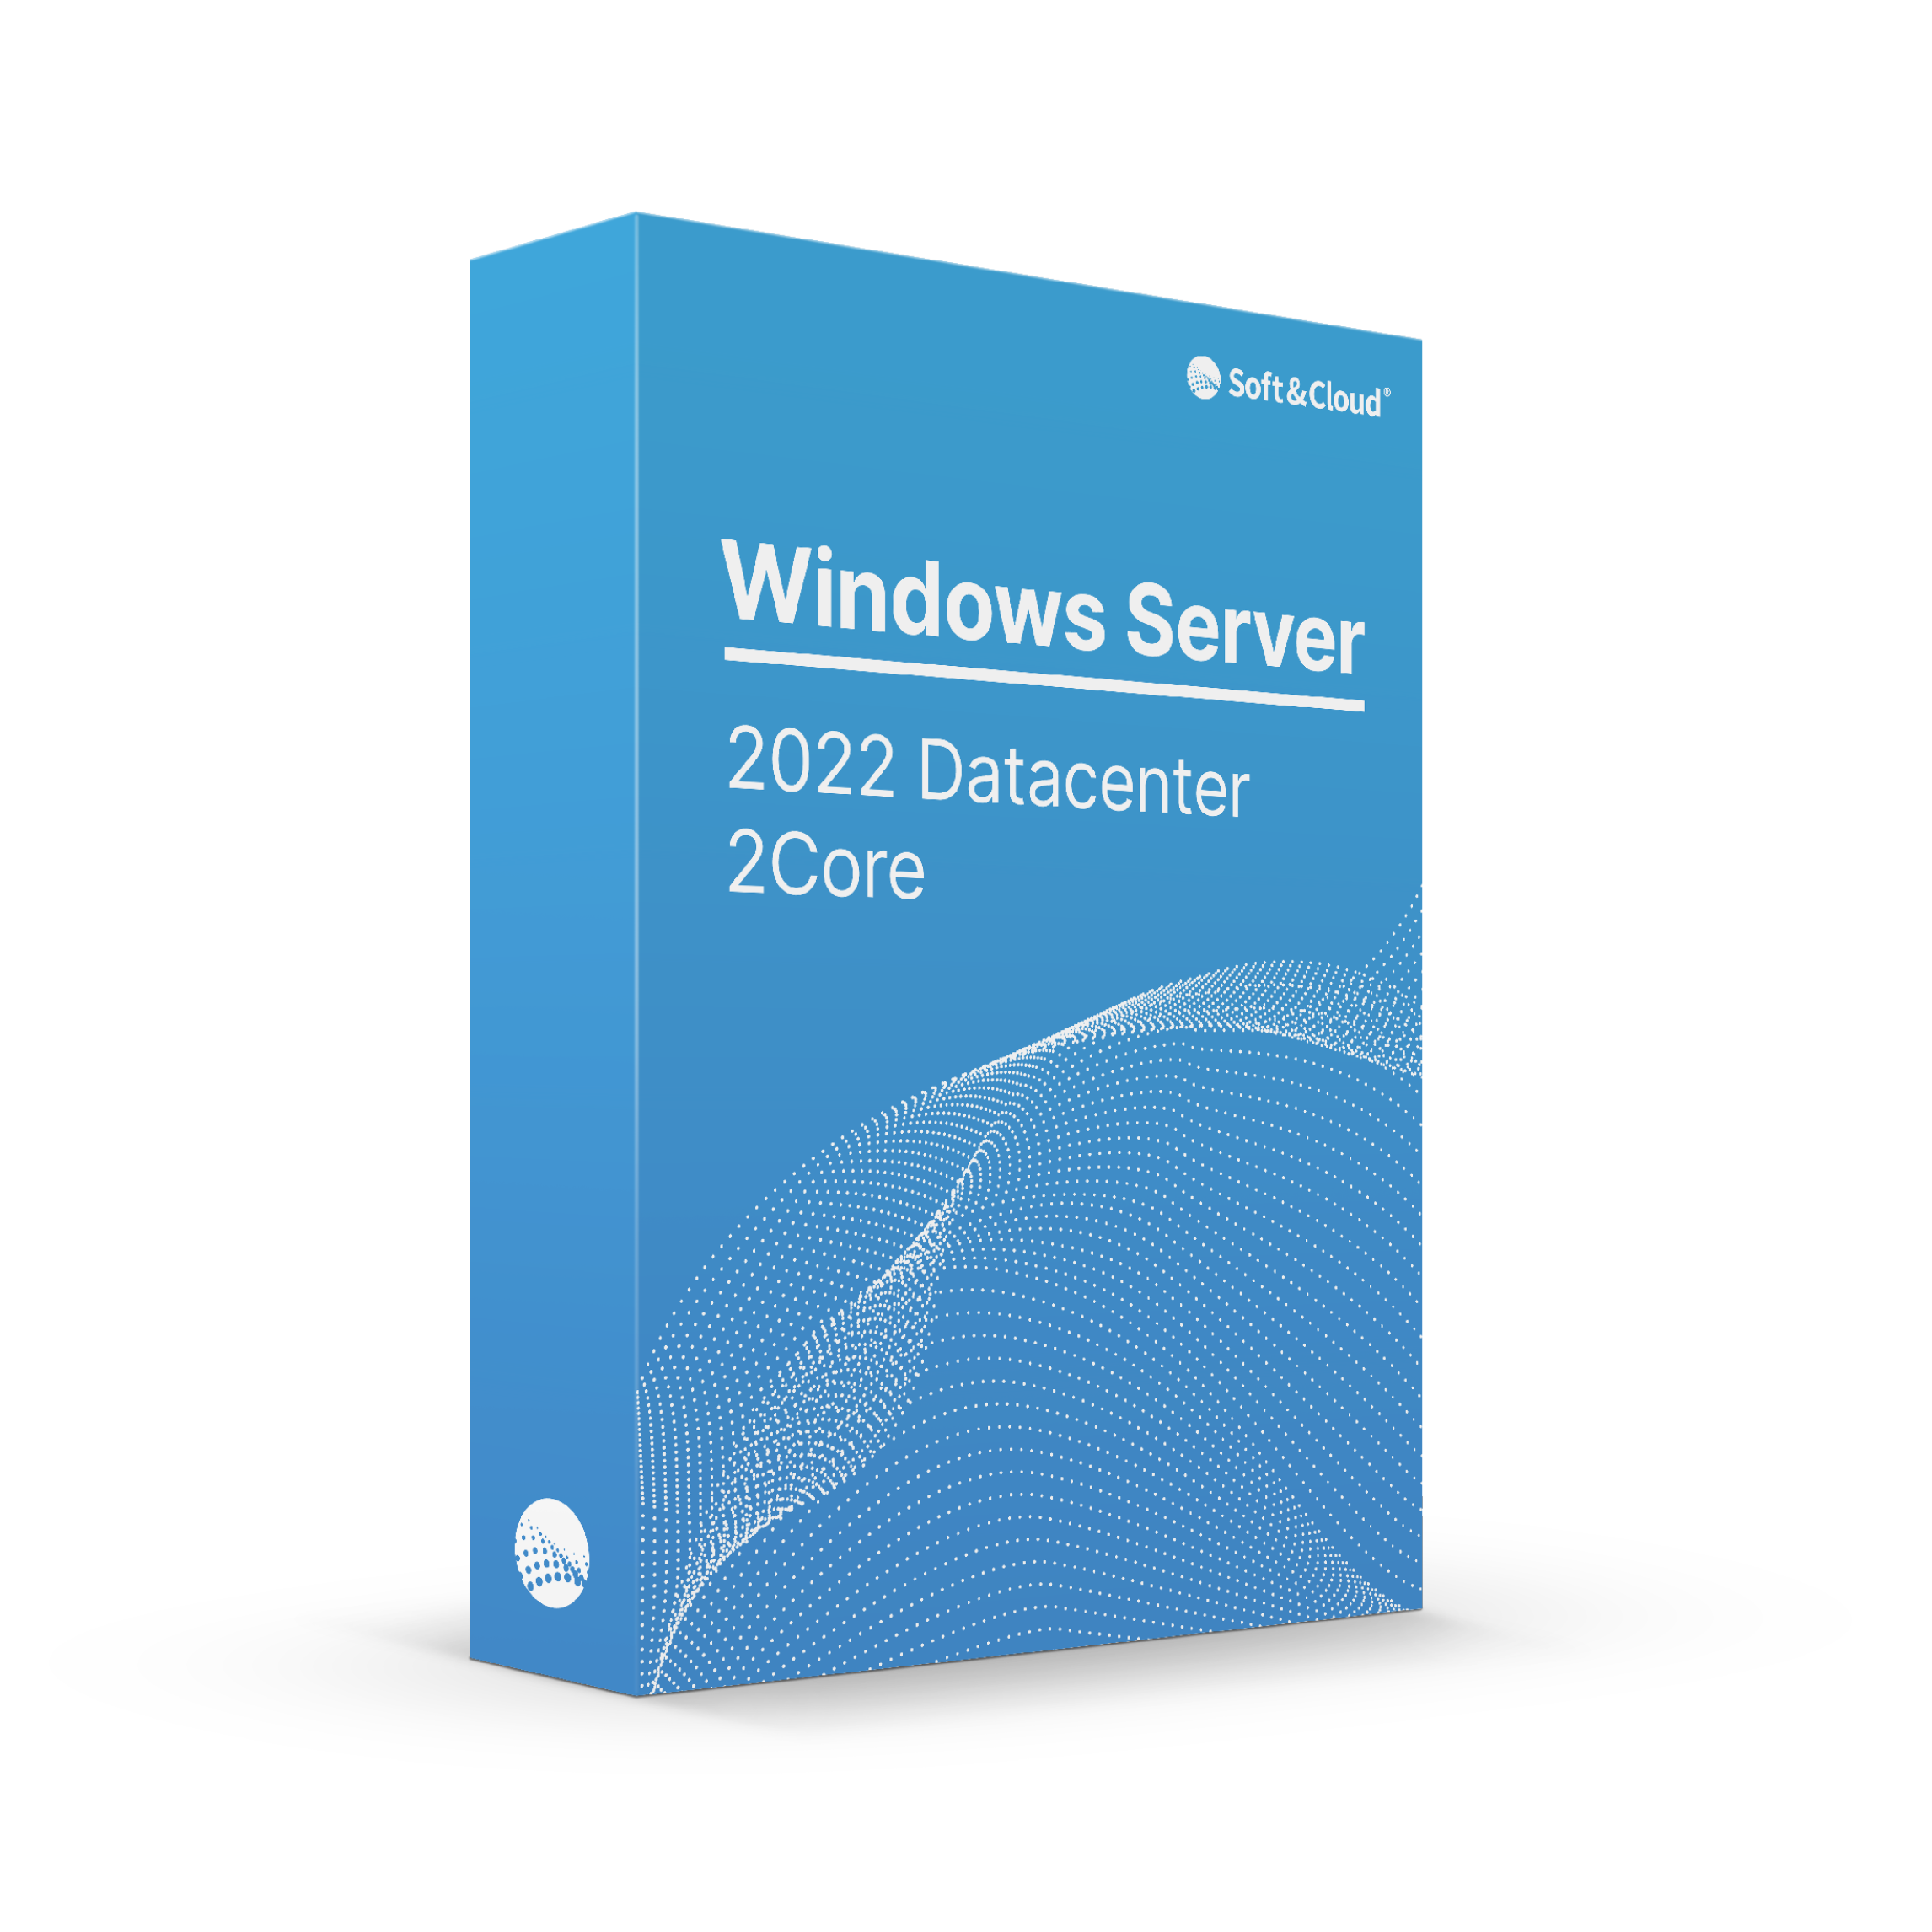 Windows Server 2022 Datacenter 2Core